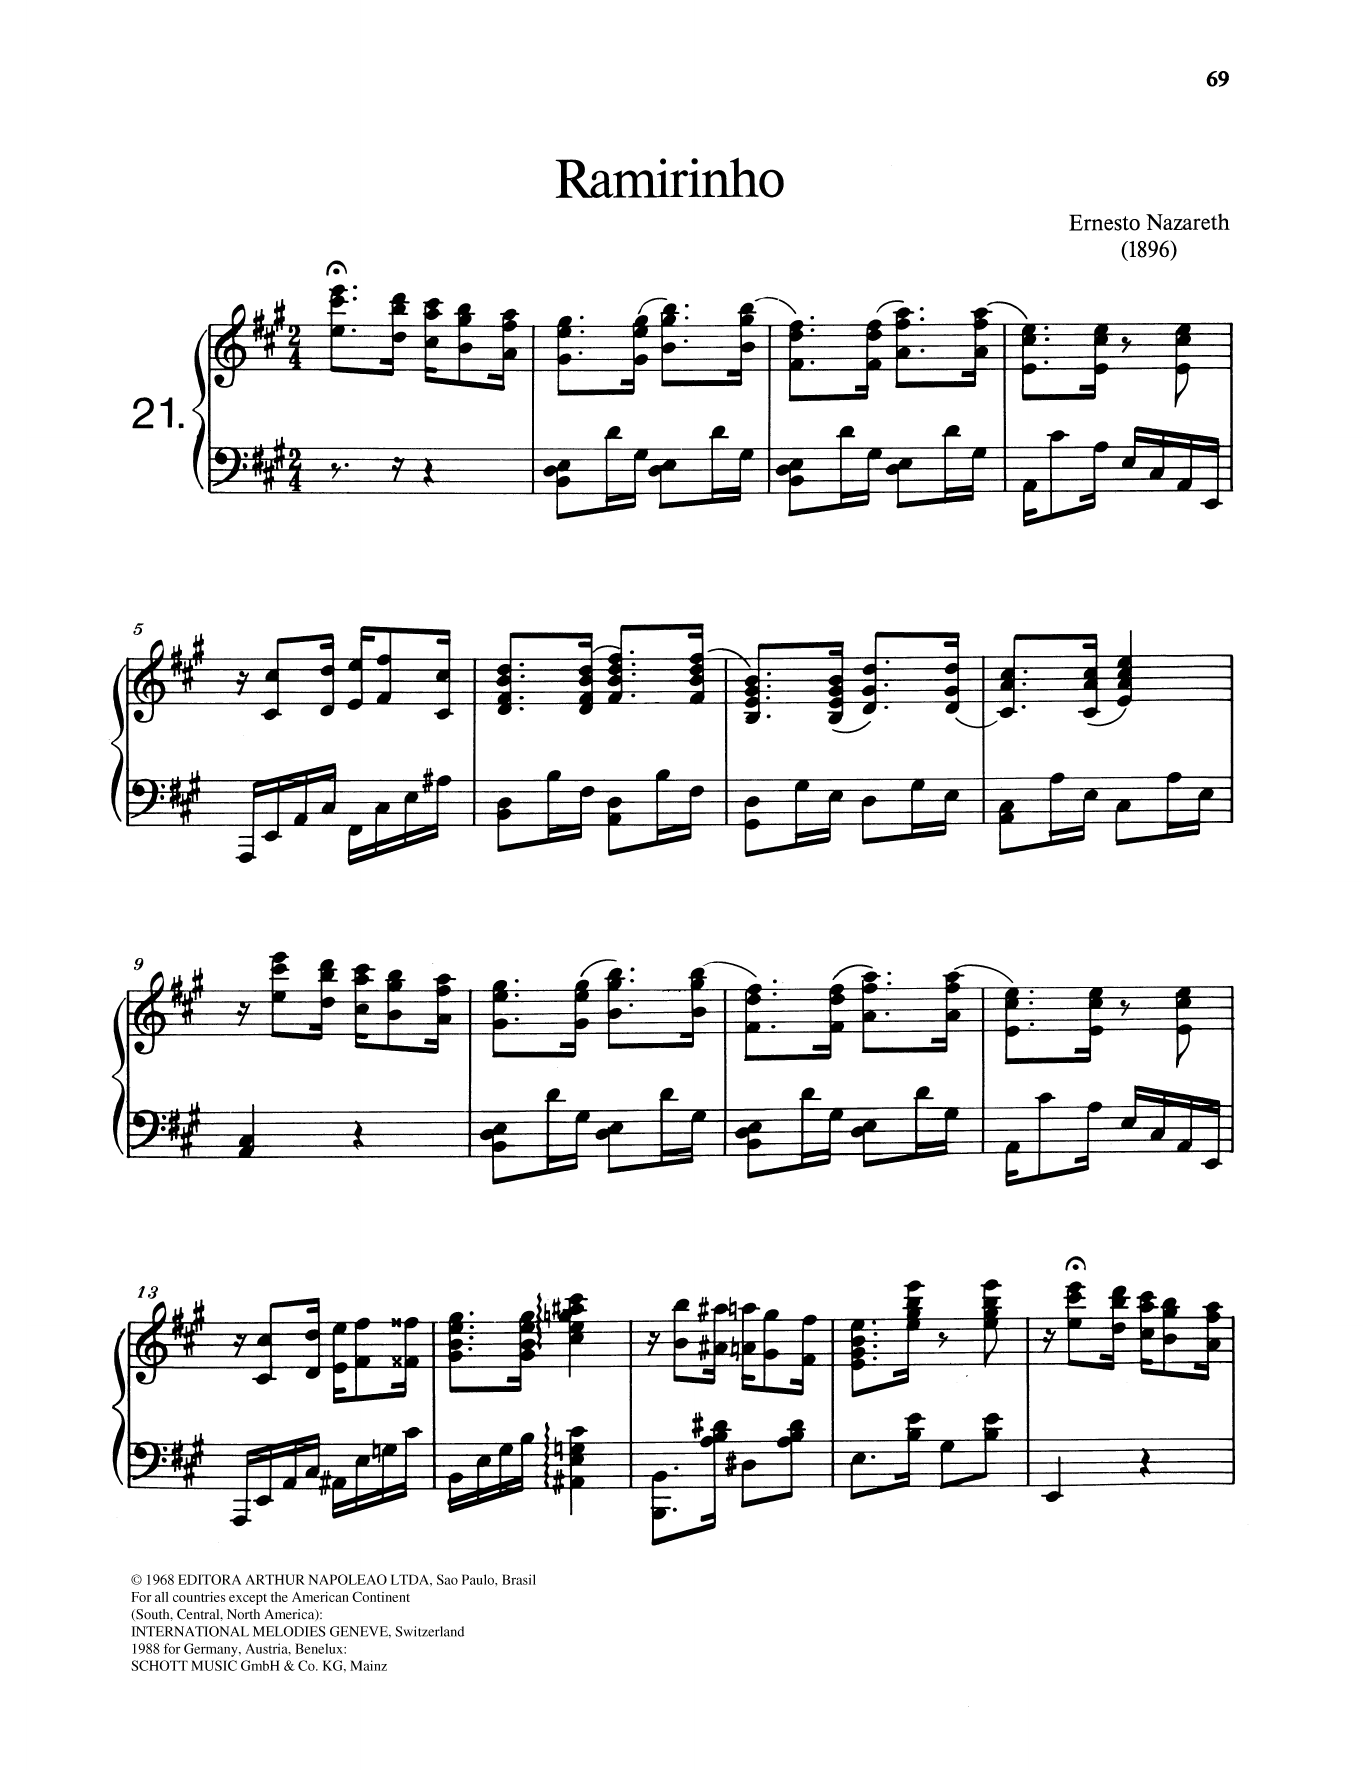 Ernesto Nazareth Ramirinho Sheet Music Notes & Chords for Piano Solo - Download or Print PDF